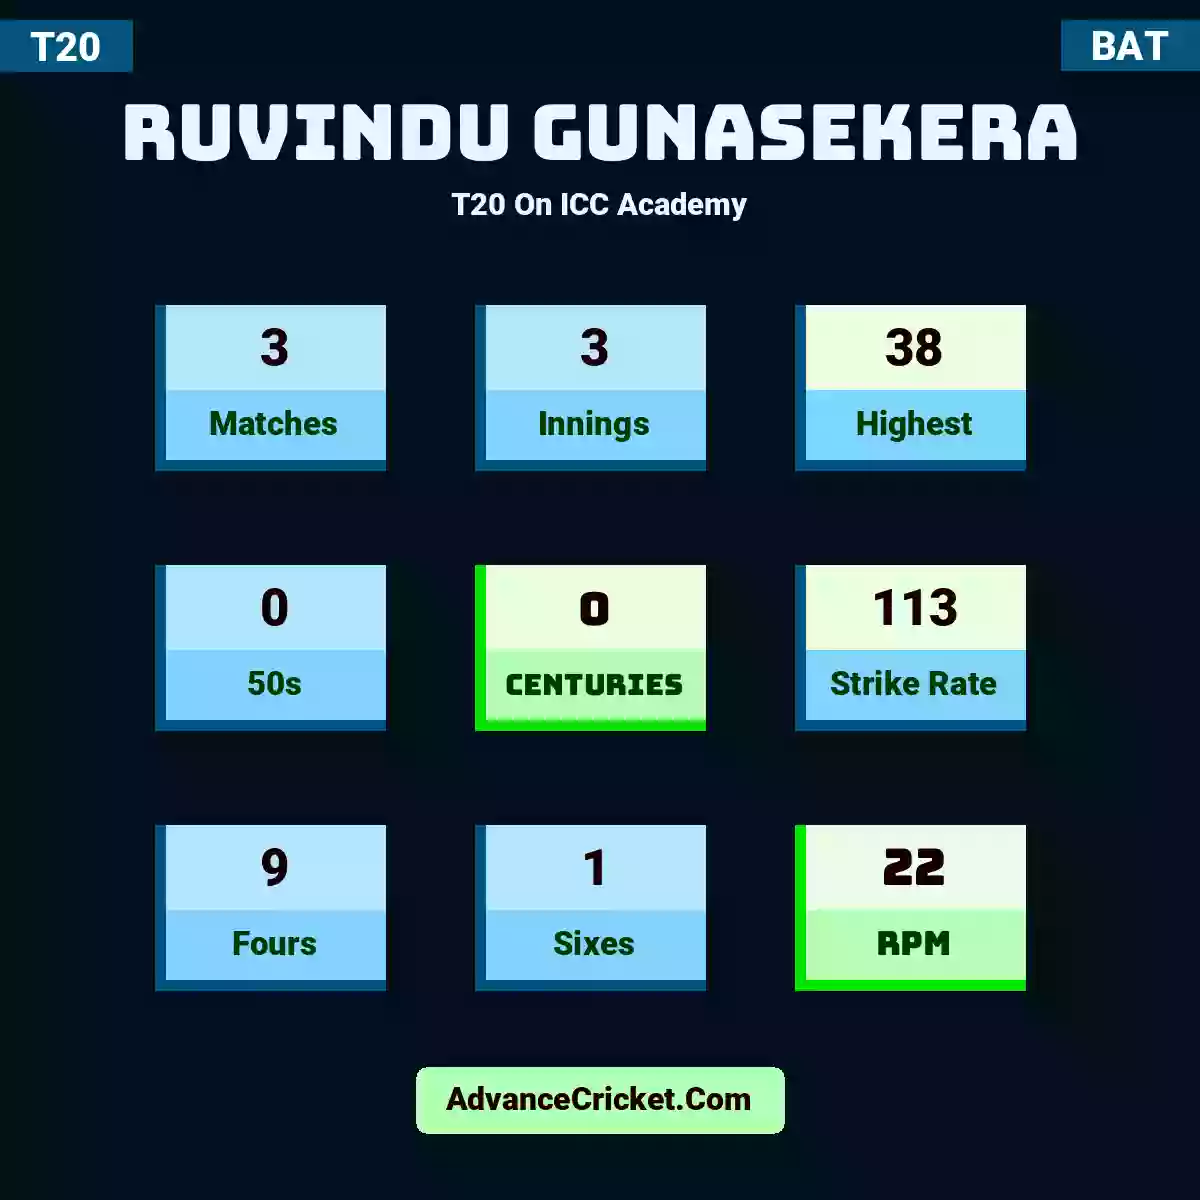 Ruvindu Gunasekera T20  On ICC Academy, Ruvindu Gunasekera played 3 matches, scored 38 runs as highest, 0 half-centuries, and 0 centuries, with a strike rate of 113. R.Gunasekera hit 9 fours and 1 sixes, with an RPM of 22.